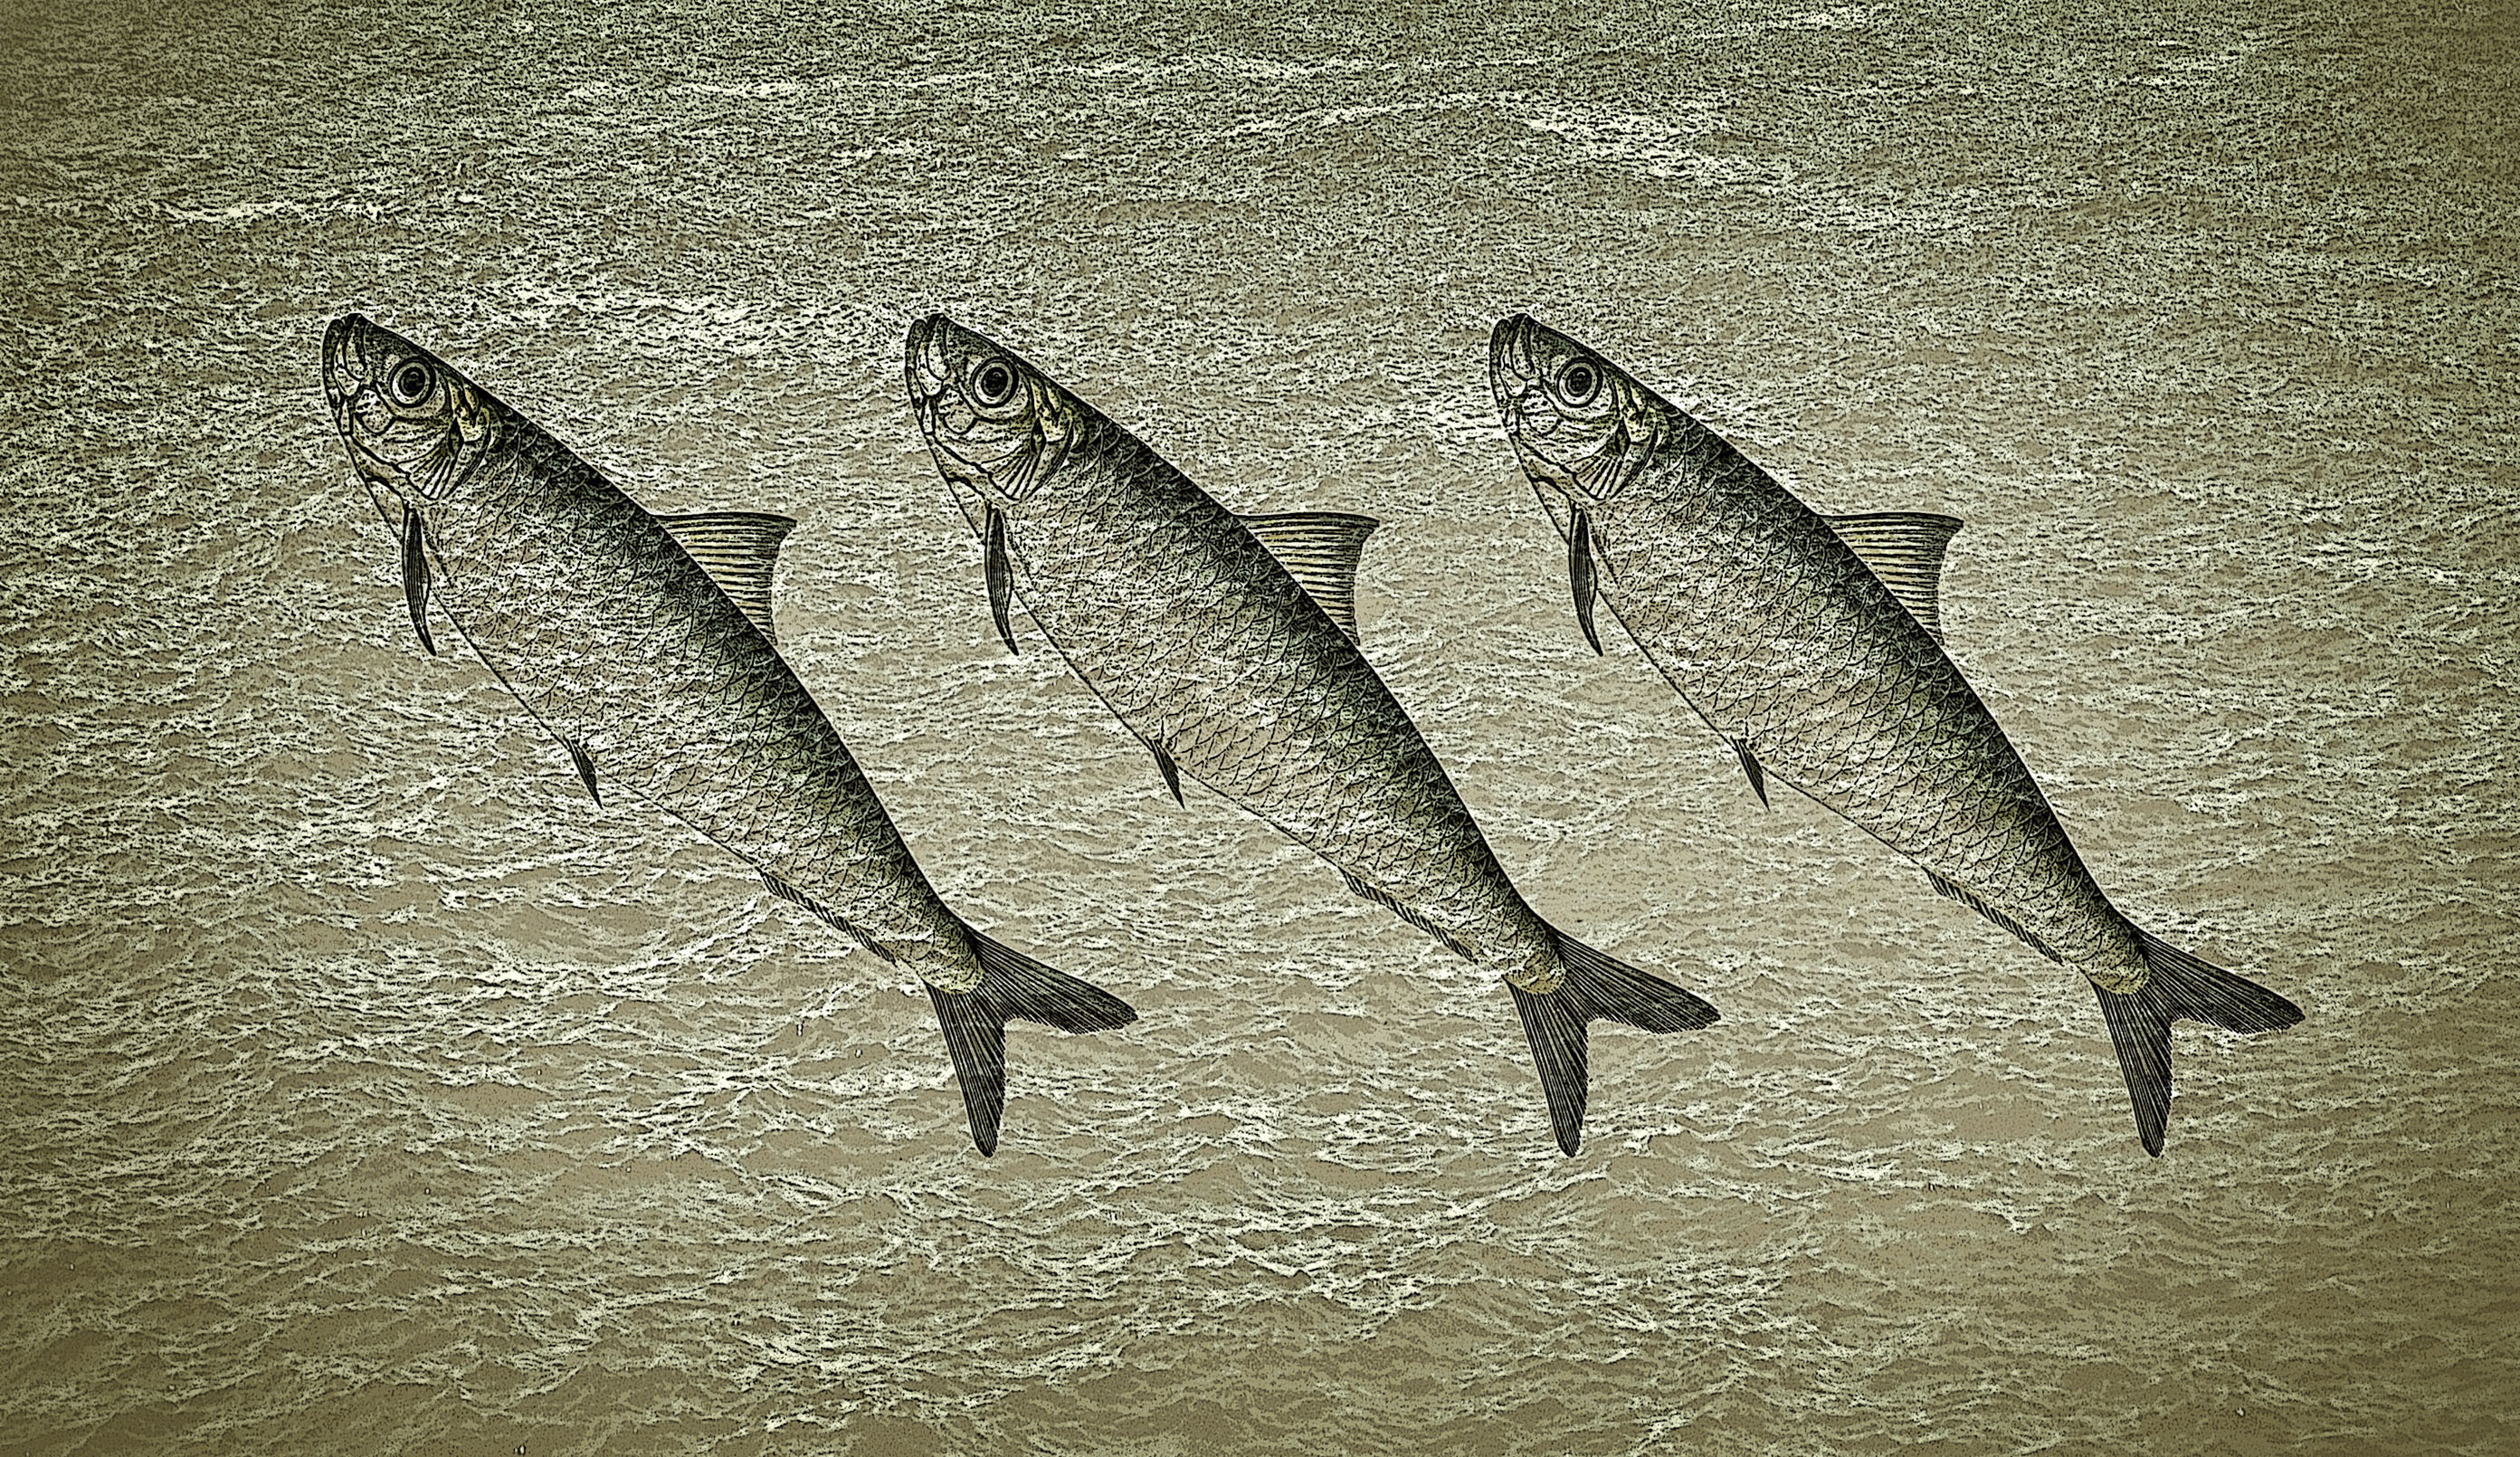 Stylized sardines on rough water background photo